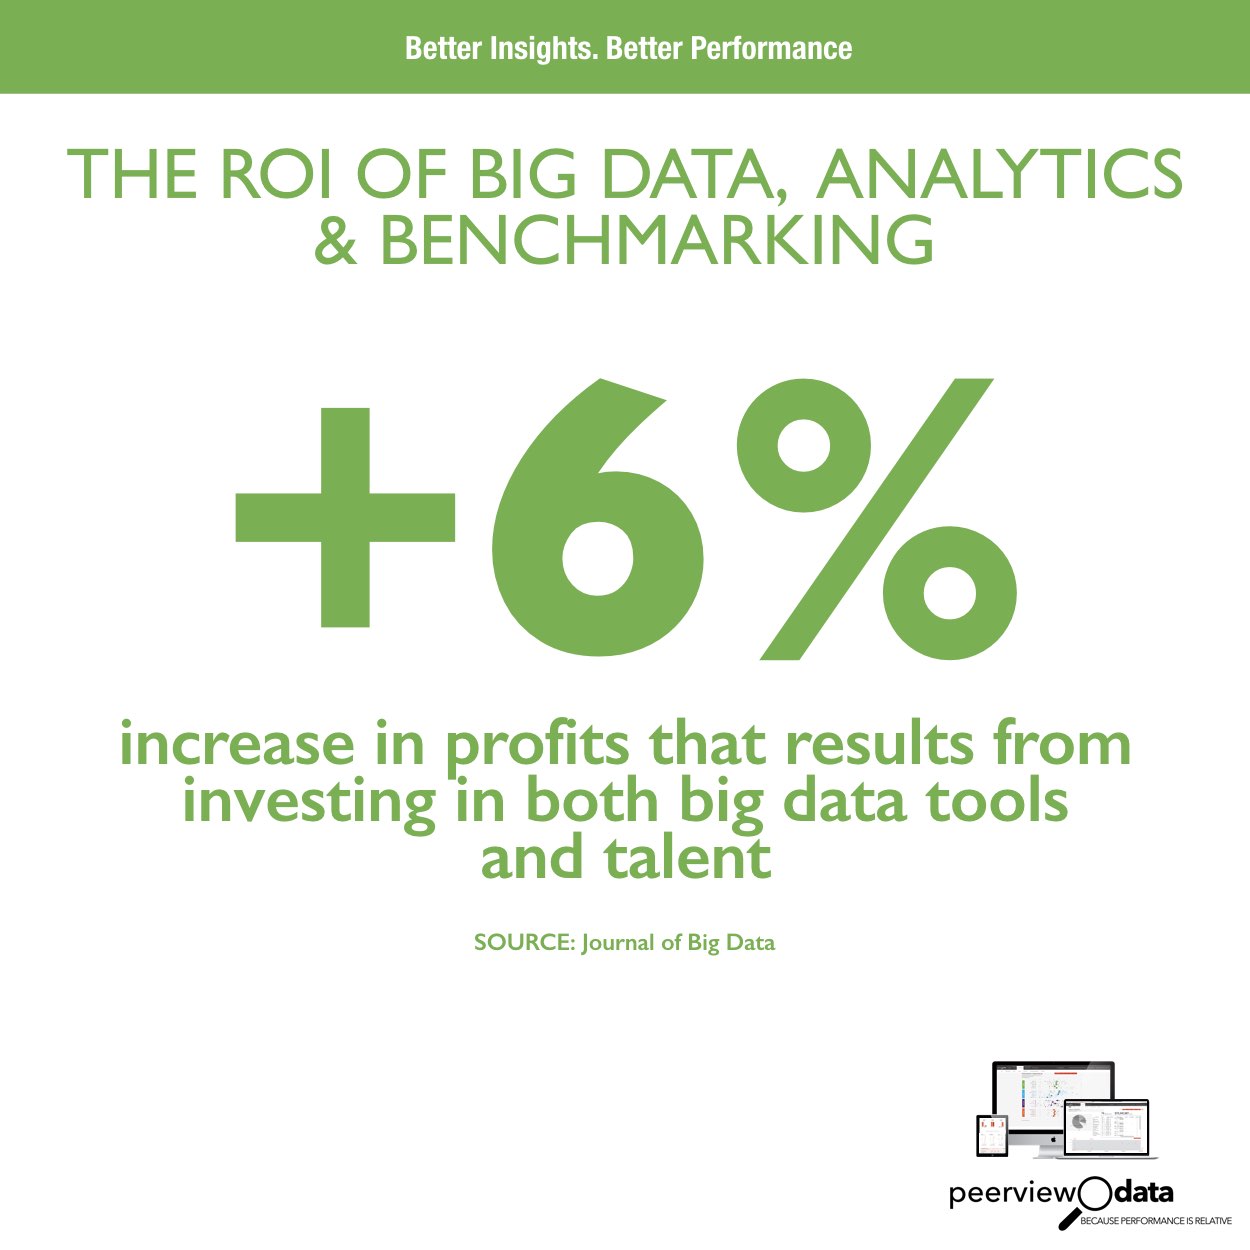 The ROI of Big Data, Analytics & Benchmarking #3